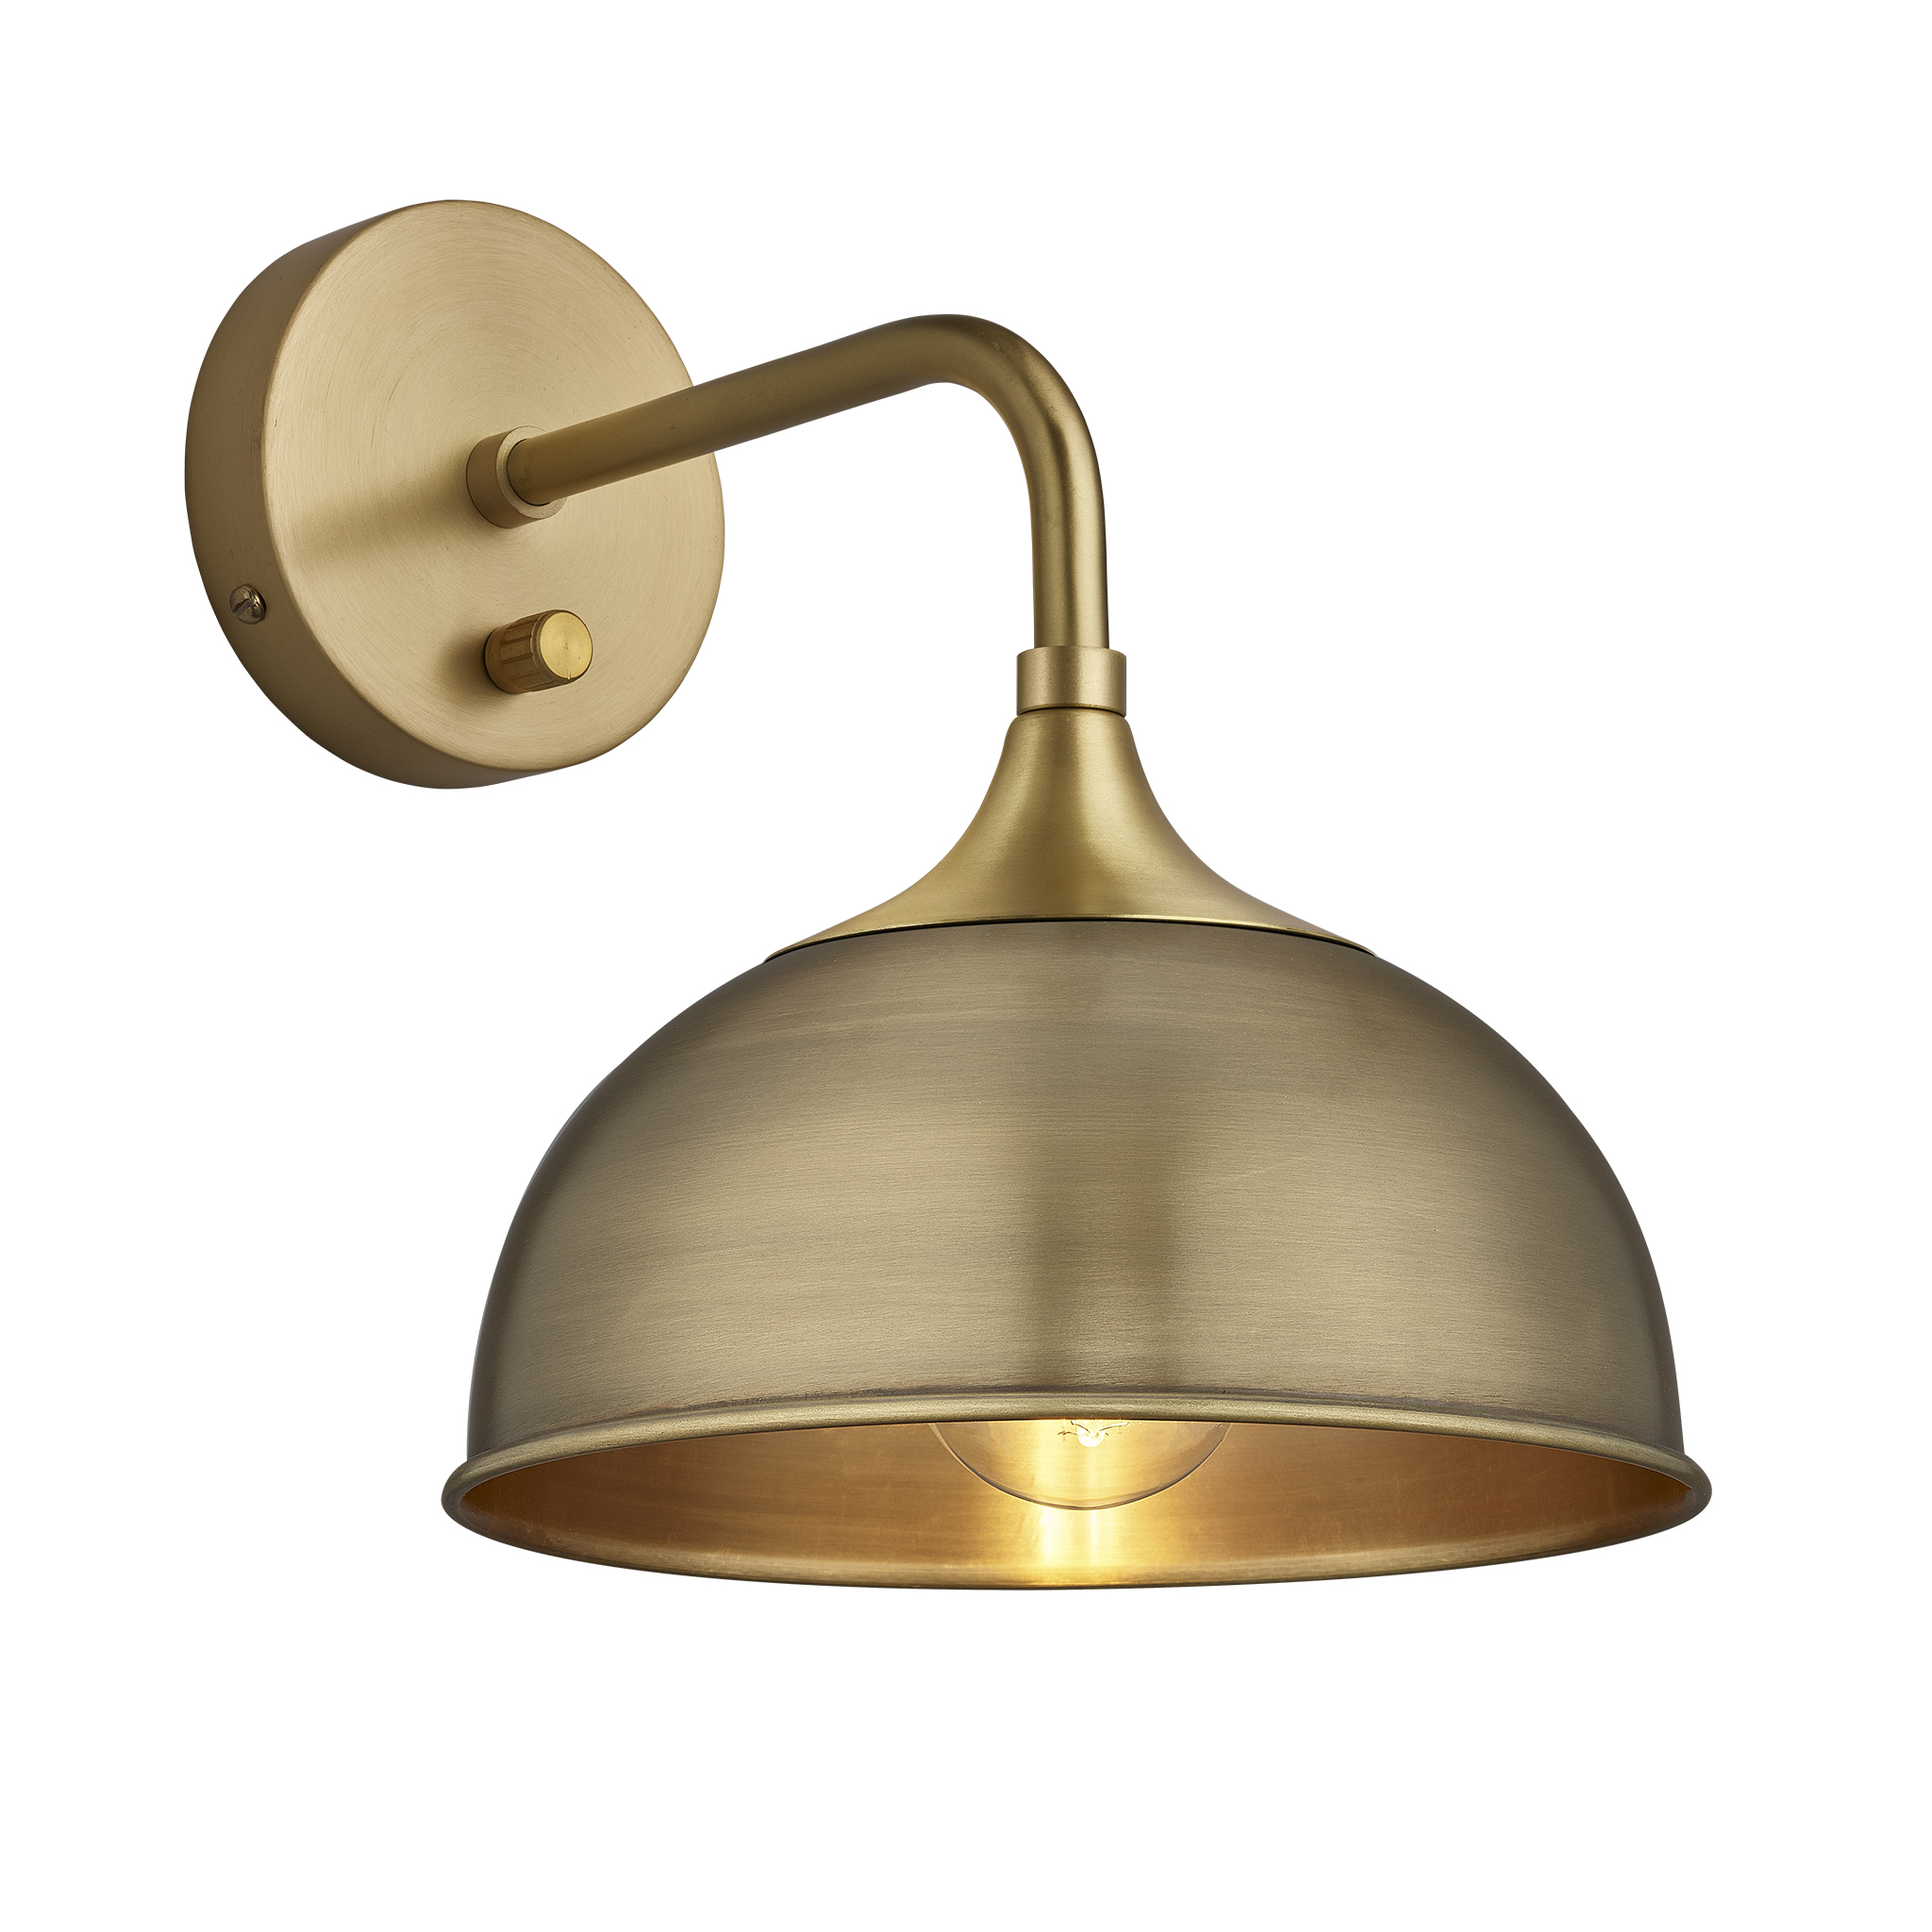  Chelsea Dome Wall Light - 8 Inch - Brass - Brass Holder